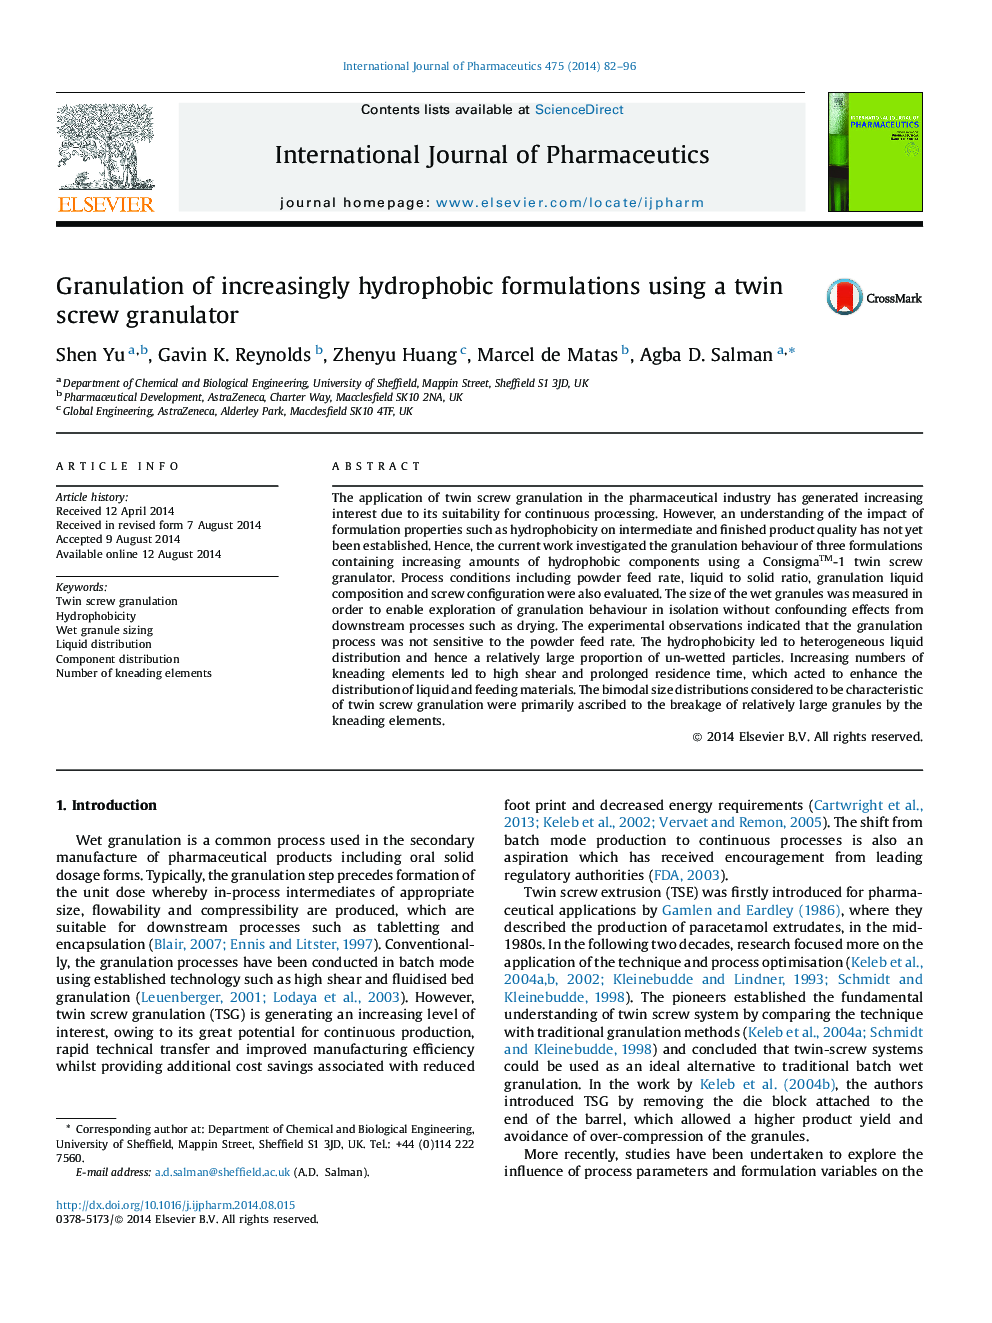 Granulation of increasingly hydrophobic formulations using a twin screw granulator